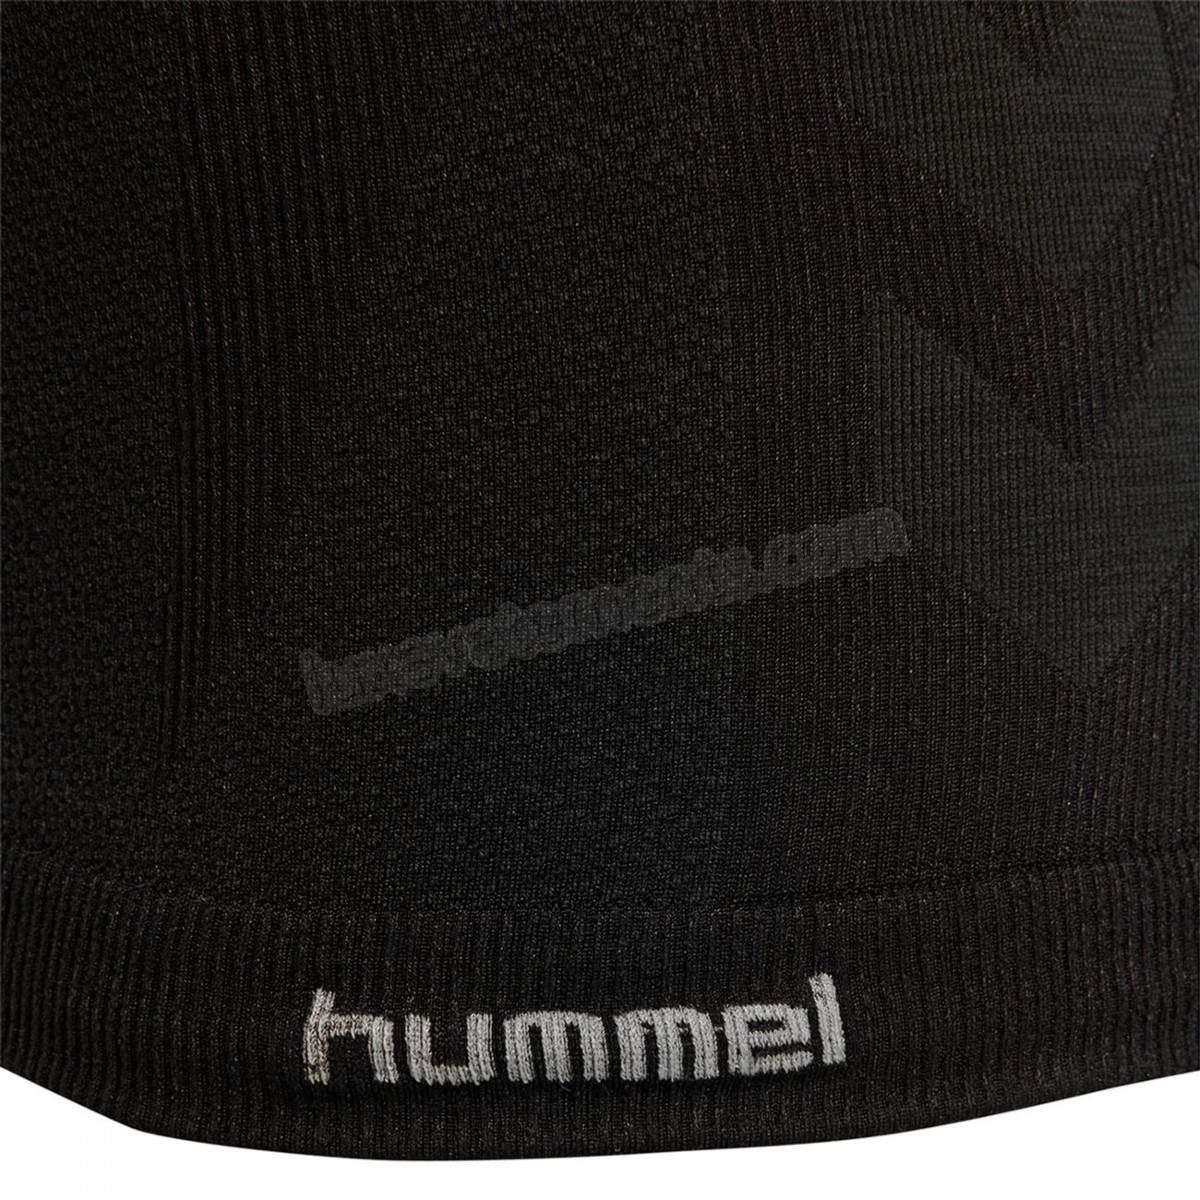 Hummel-Mode- Lifestyle femme HUMMEL T-shirt femme Hummel clea seamless top Vente en ligne - -8